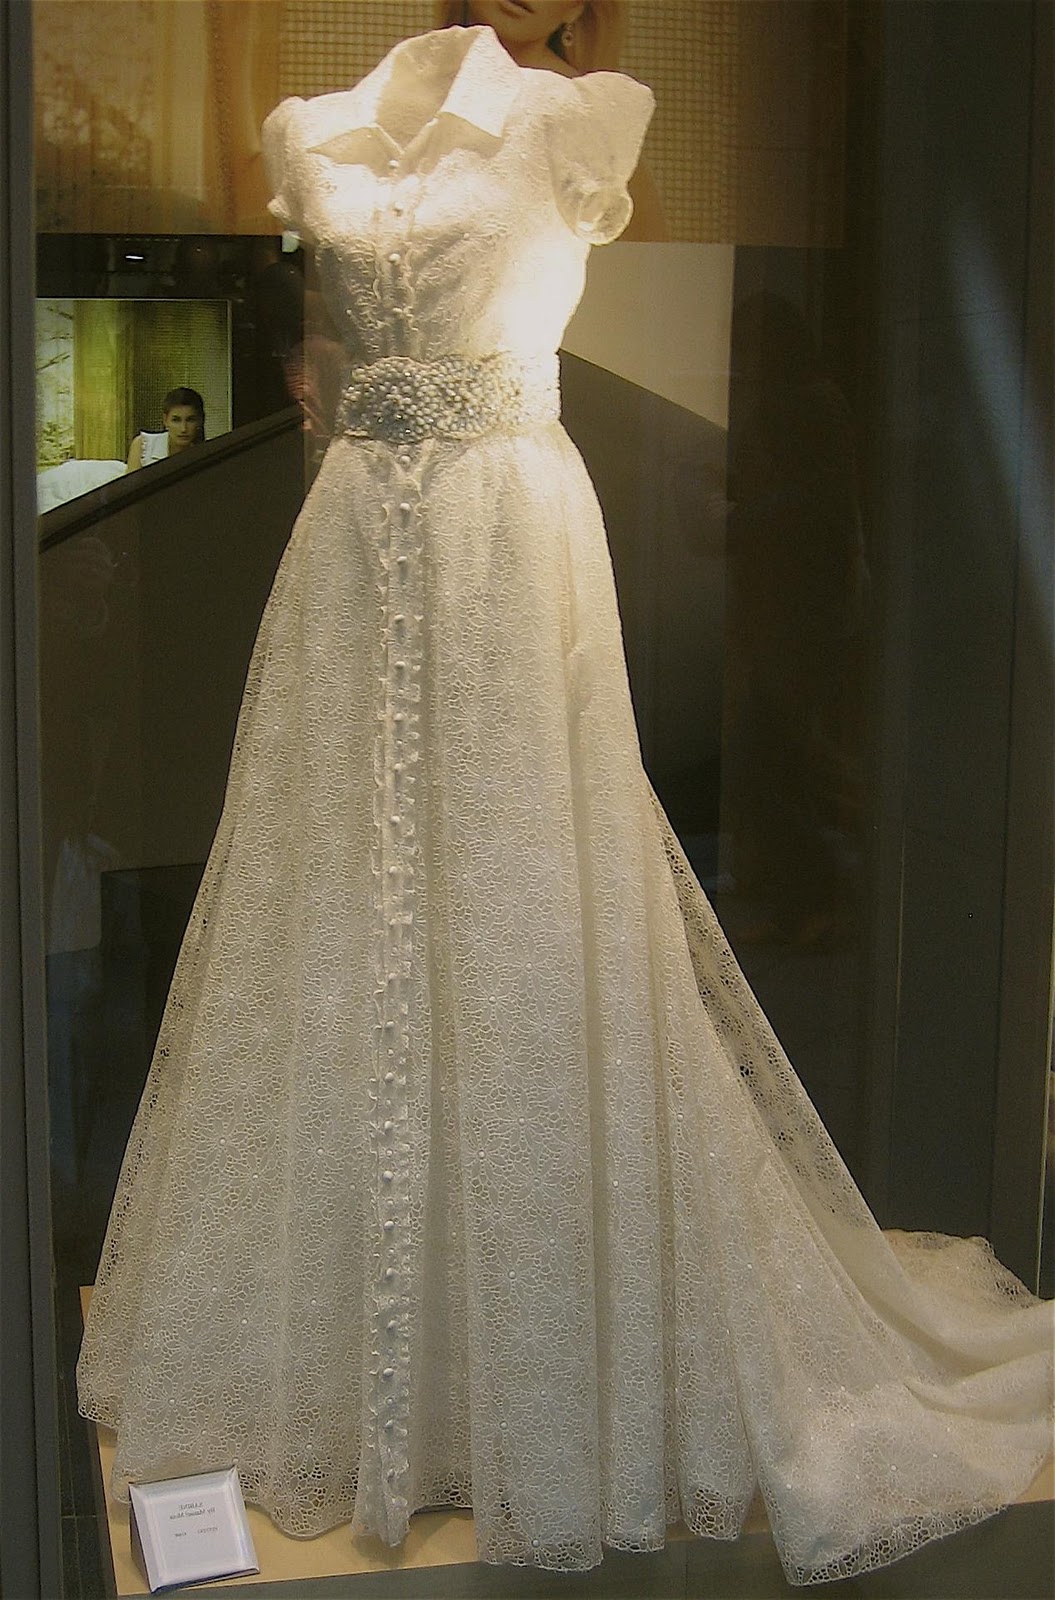 A Spanish wedding dress